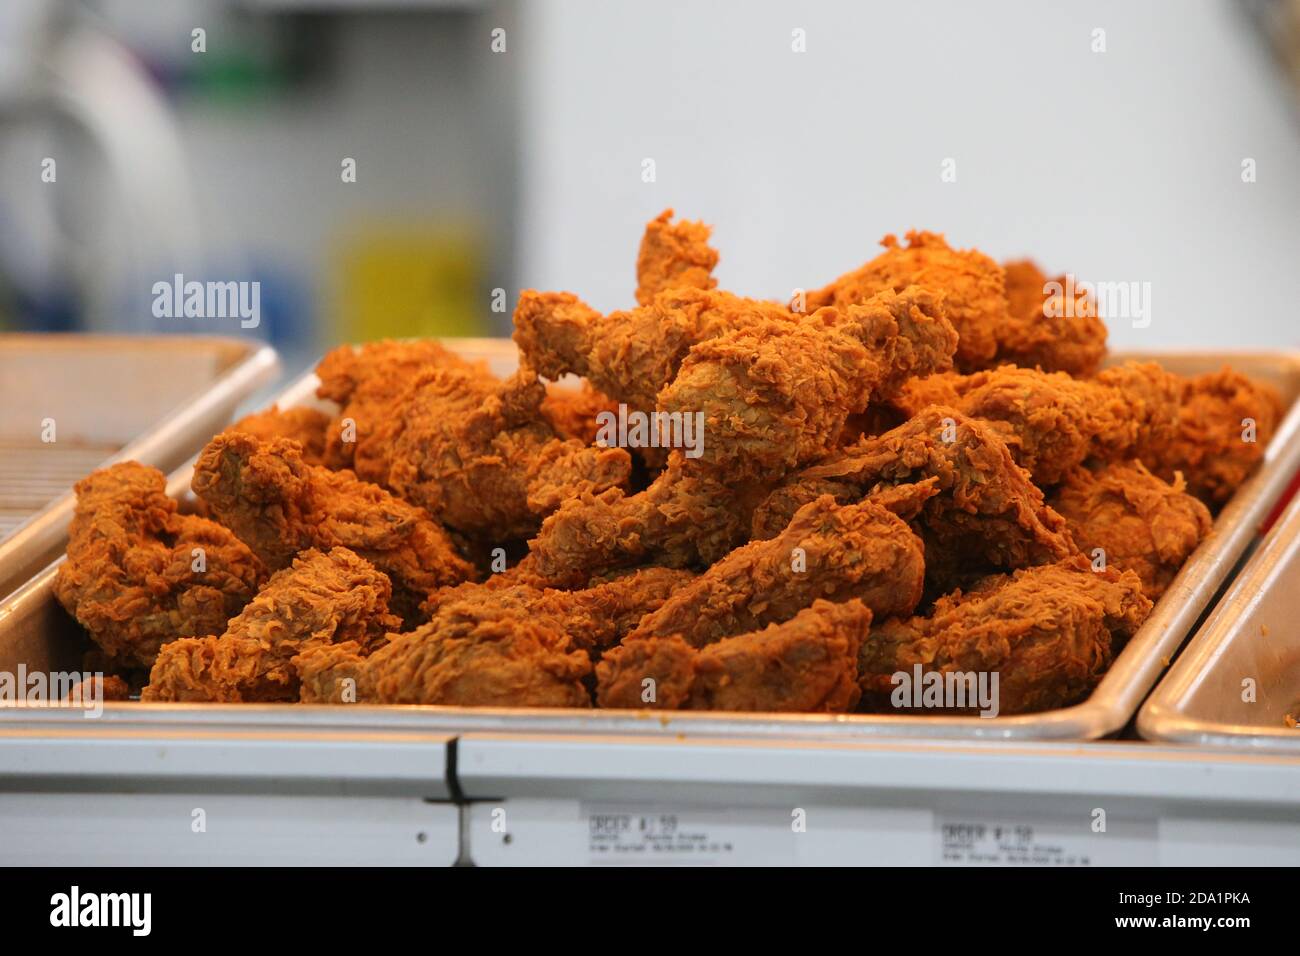 Church's Texas Chicken. 247 King St N Waterloo Ontario Canada. Luke Durda/Alamy Stock Photo